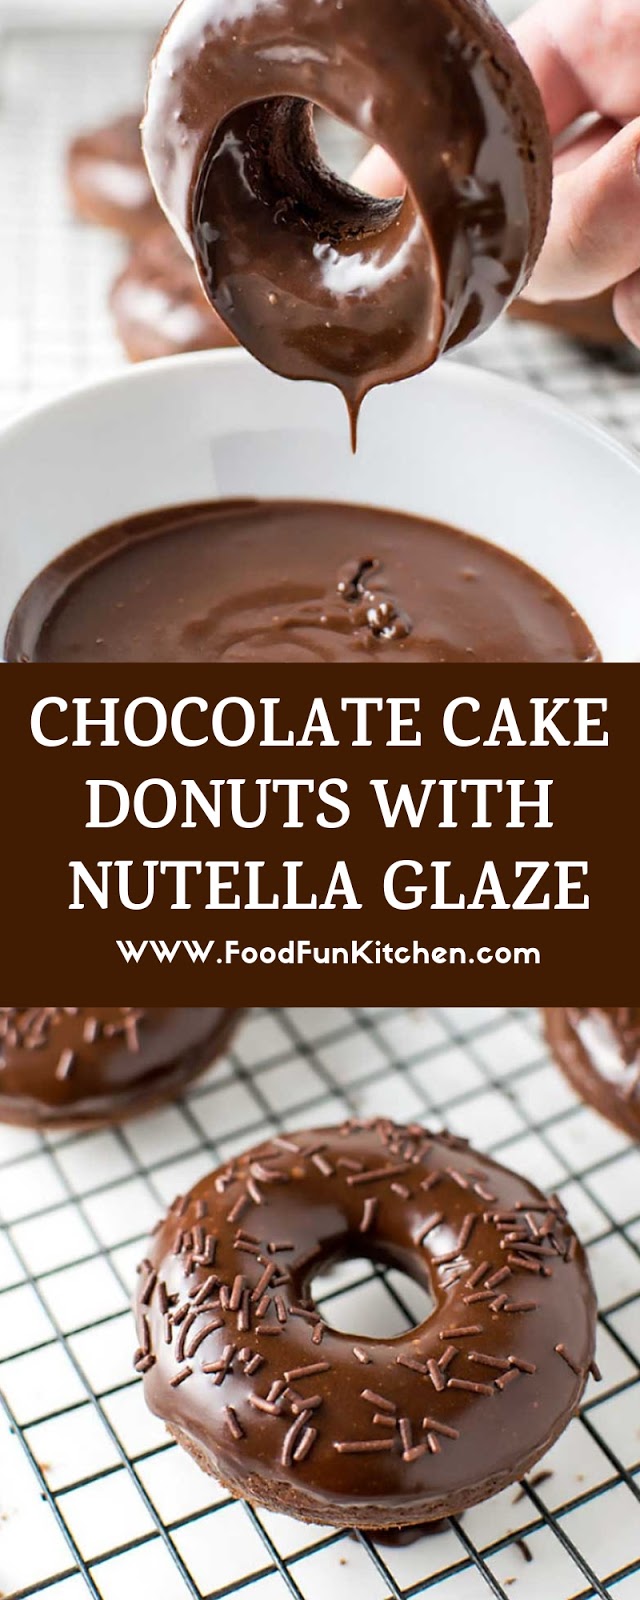 CHOCOLATE CAKE DONUTS WITH NUTELLA GLAZE